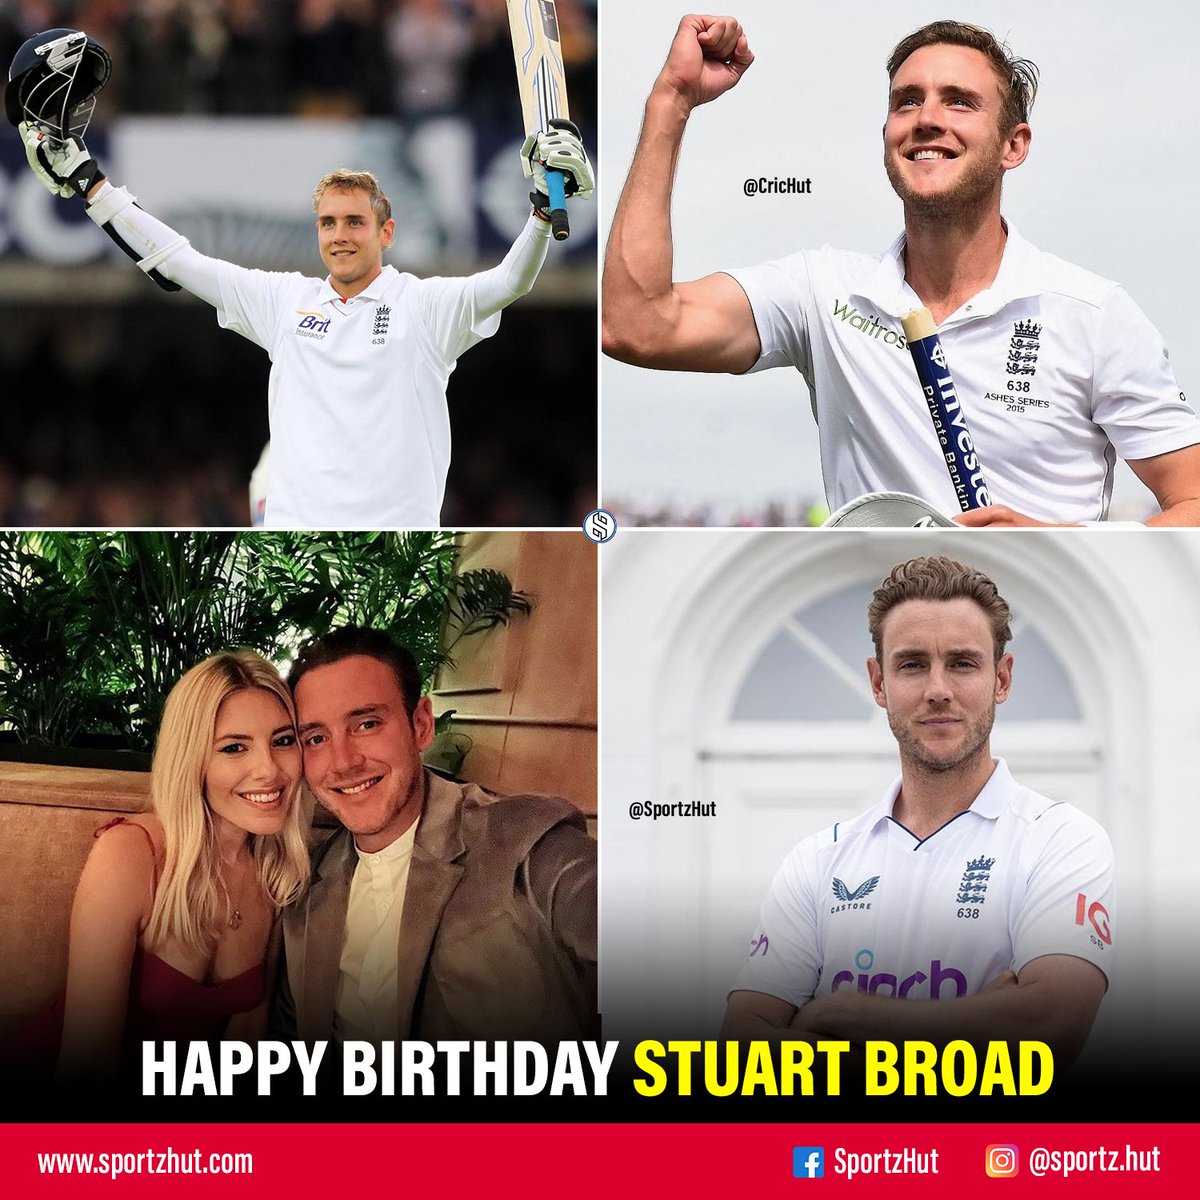 Happy Birthday Stuart Broad❤️✨
@StuartBroad8

#HappyBirthdayStuartBroad #HappyBirthday #StuartBroad